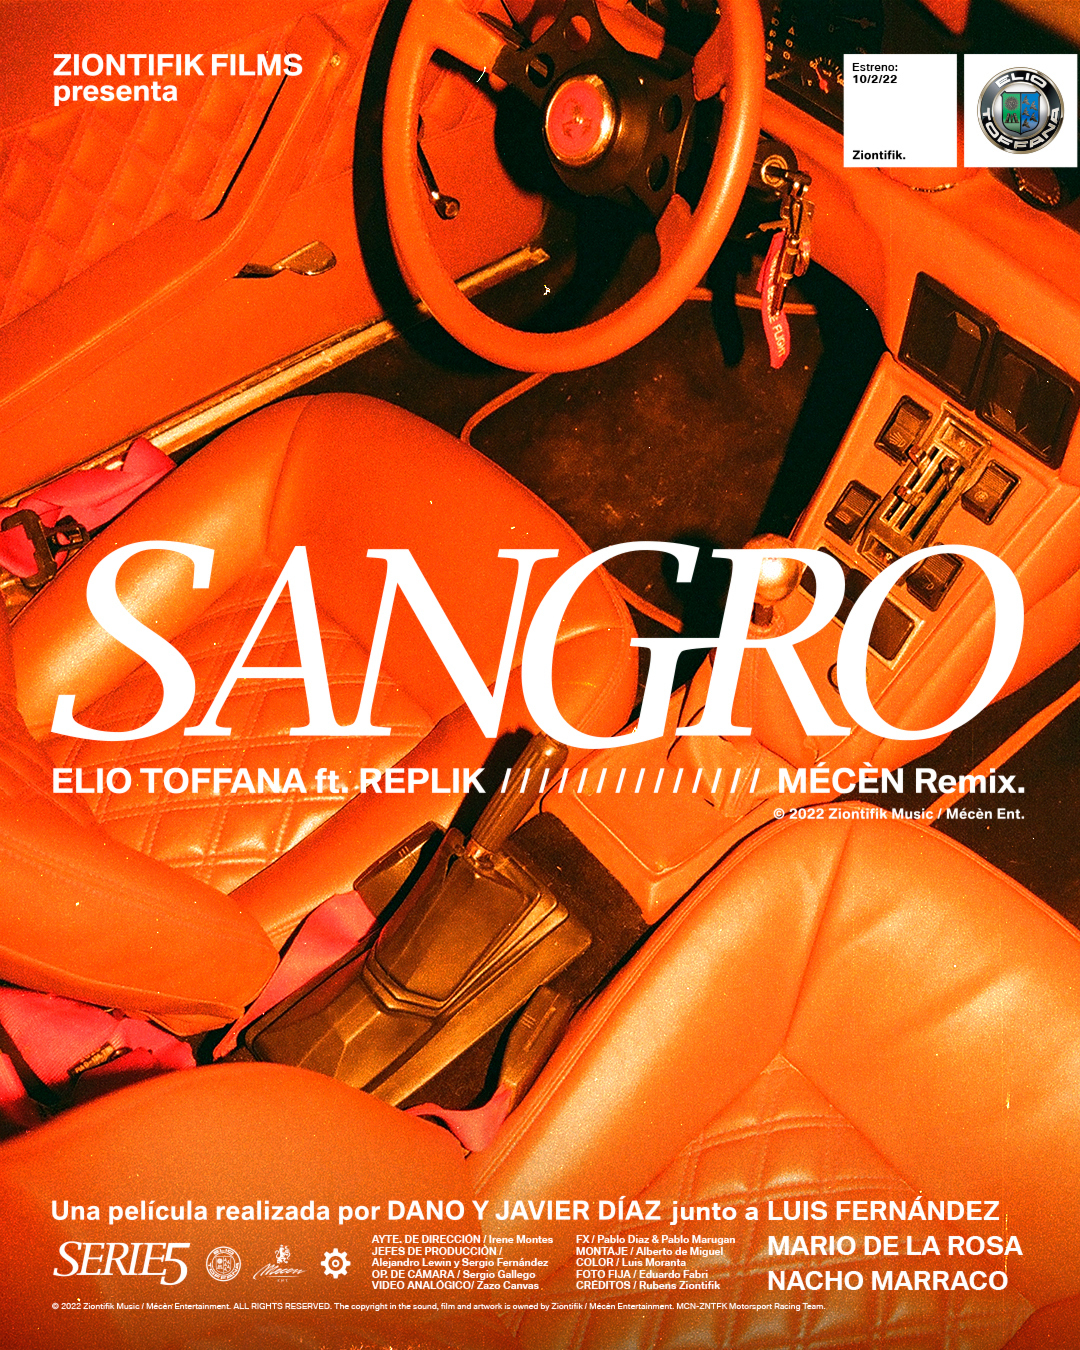 Elio Toffana publica el remix de "Sangro", tercer single de "Serie 5"